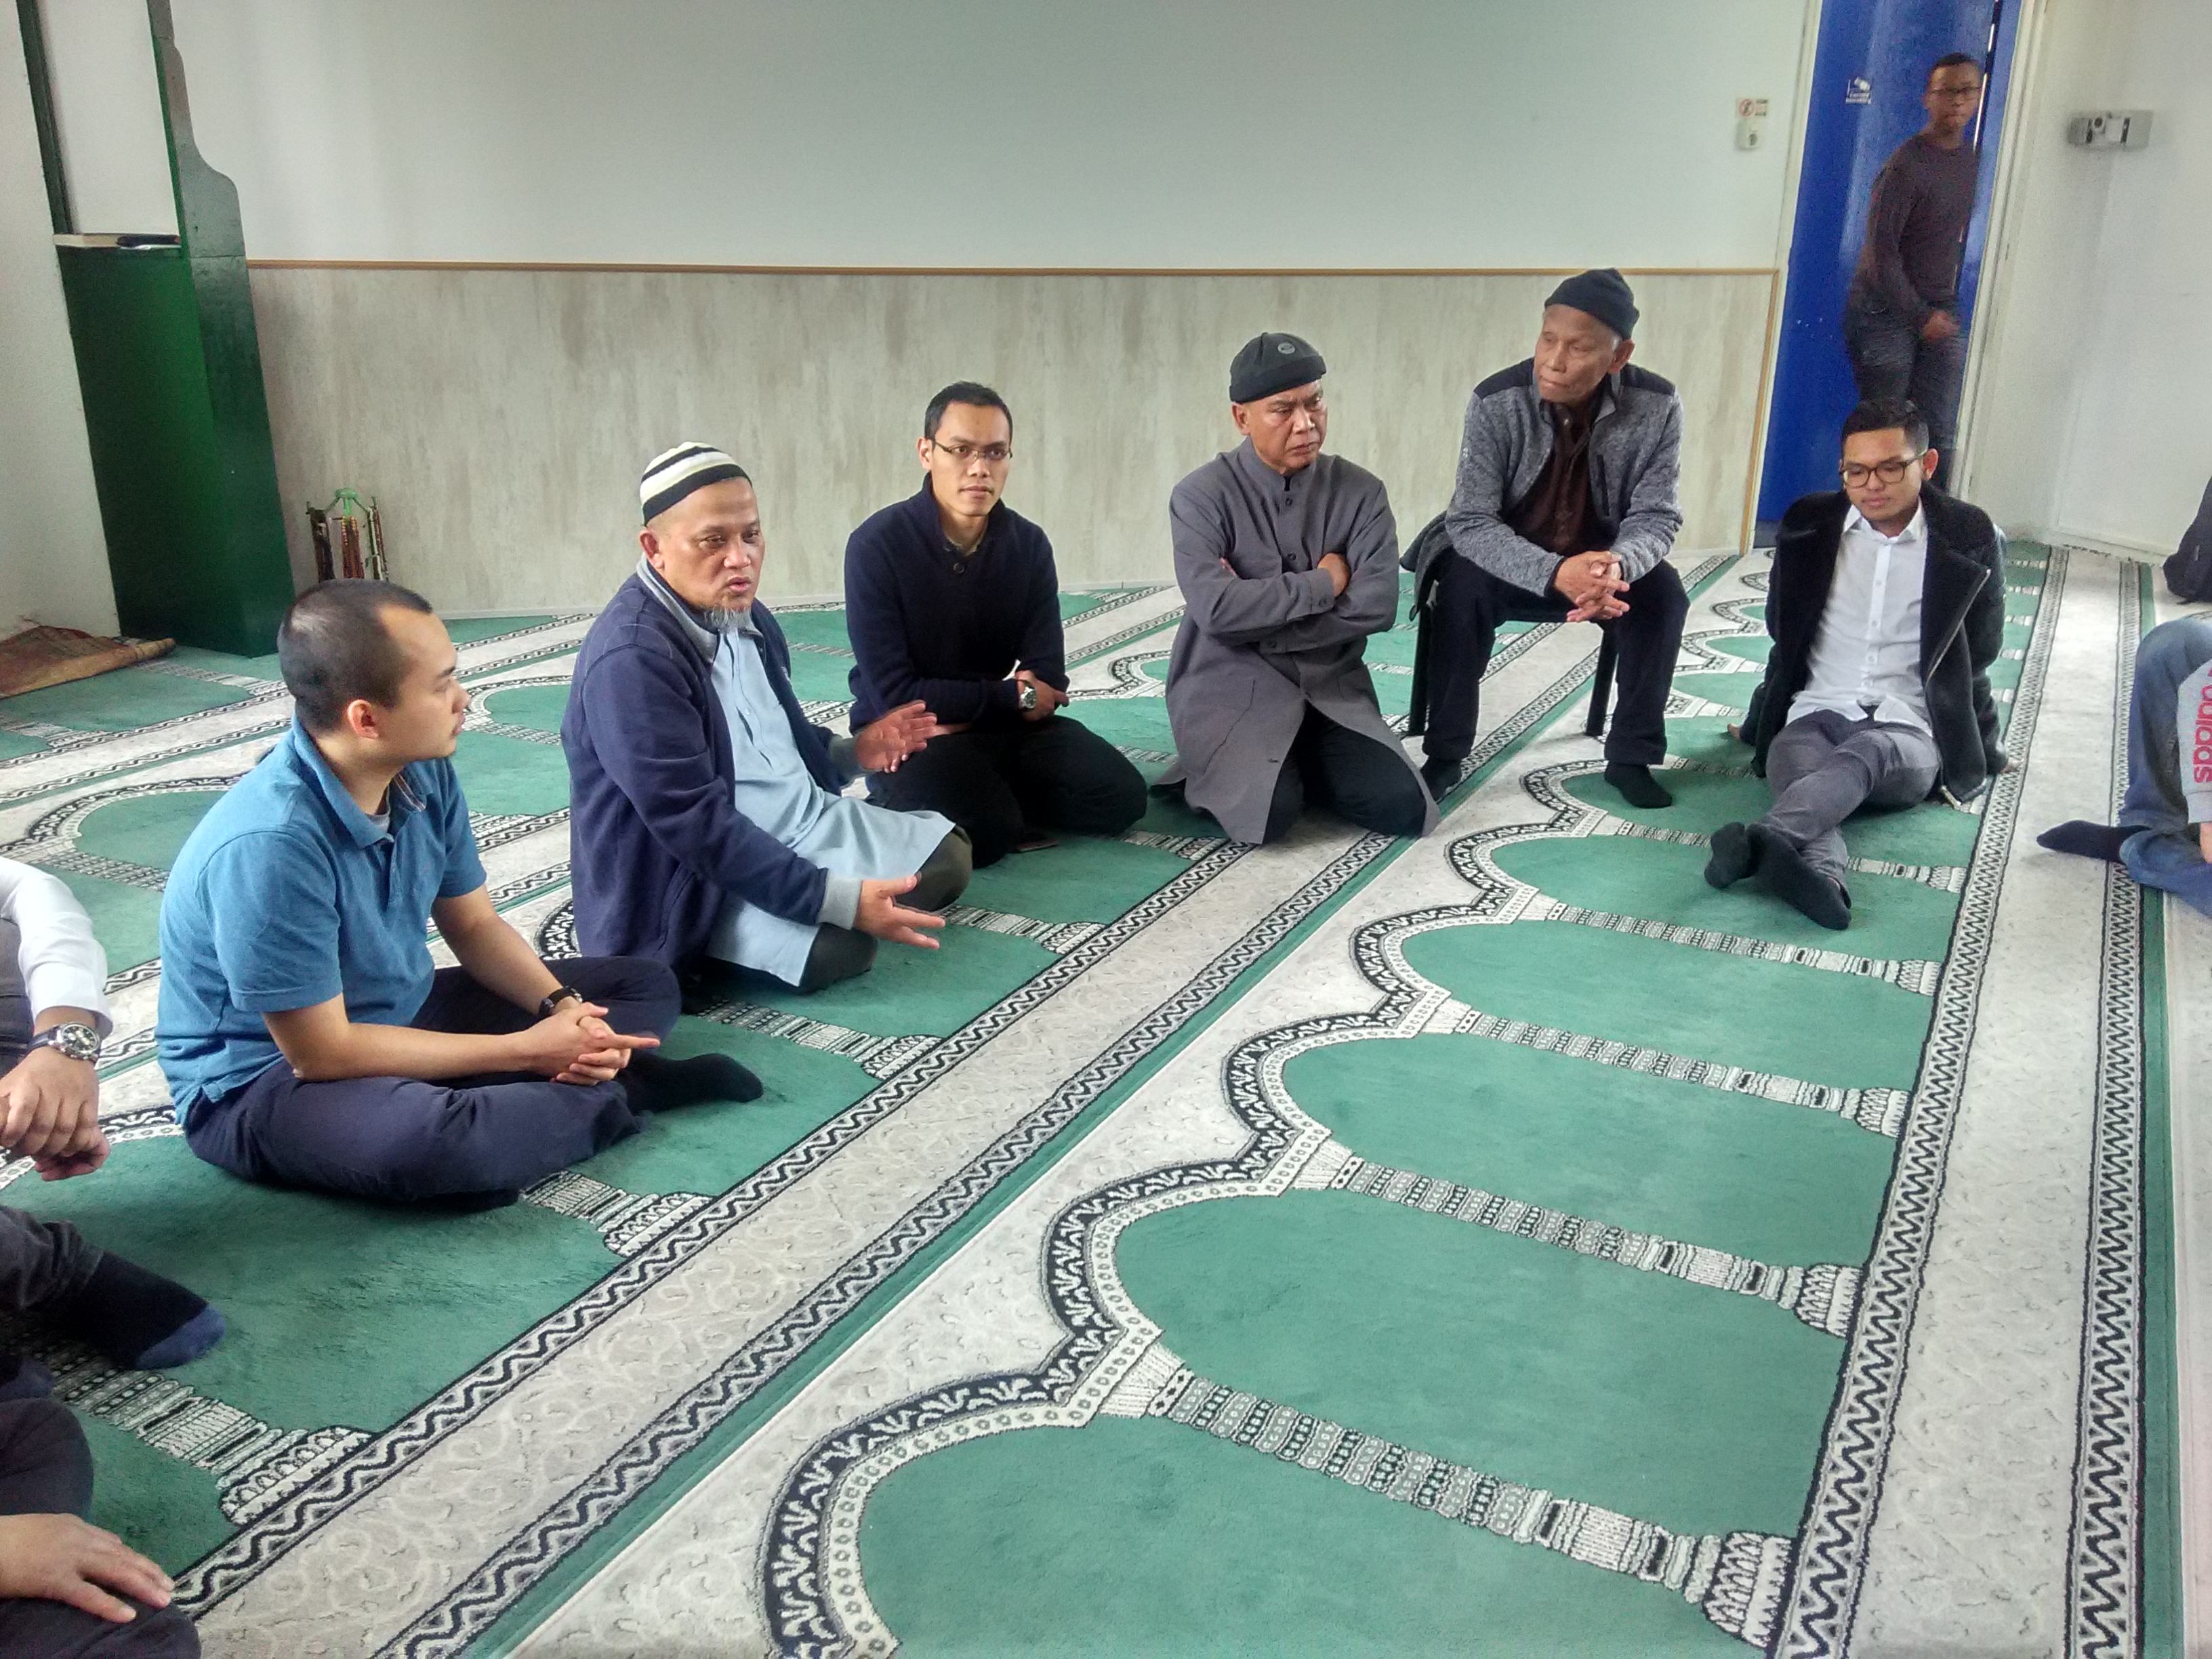 Kunjungan deGromiest ke “Moskee An-Noer” Hoogezand, Groningen